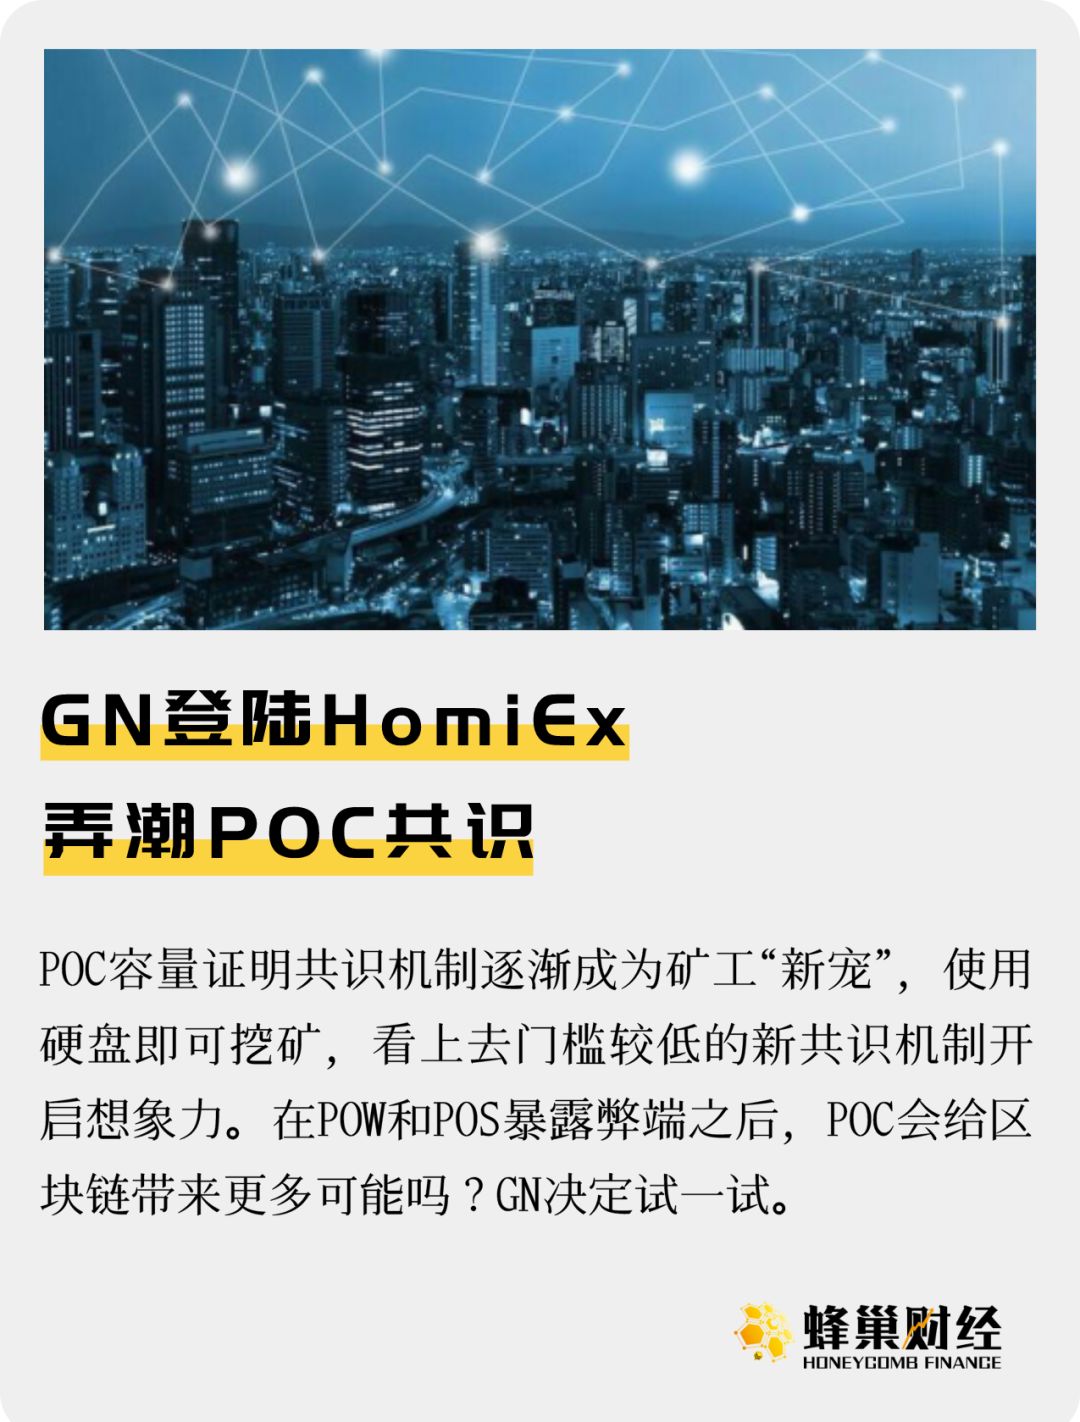 “POC以太坊”GN登陆HomiEx 或将开启硬盘挖矿新时代